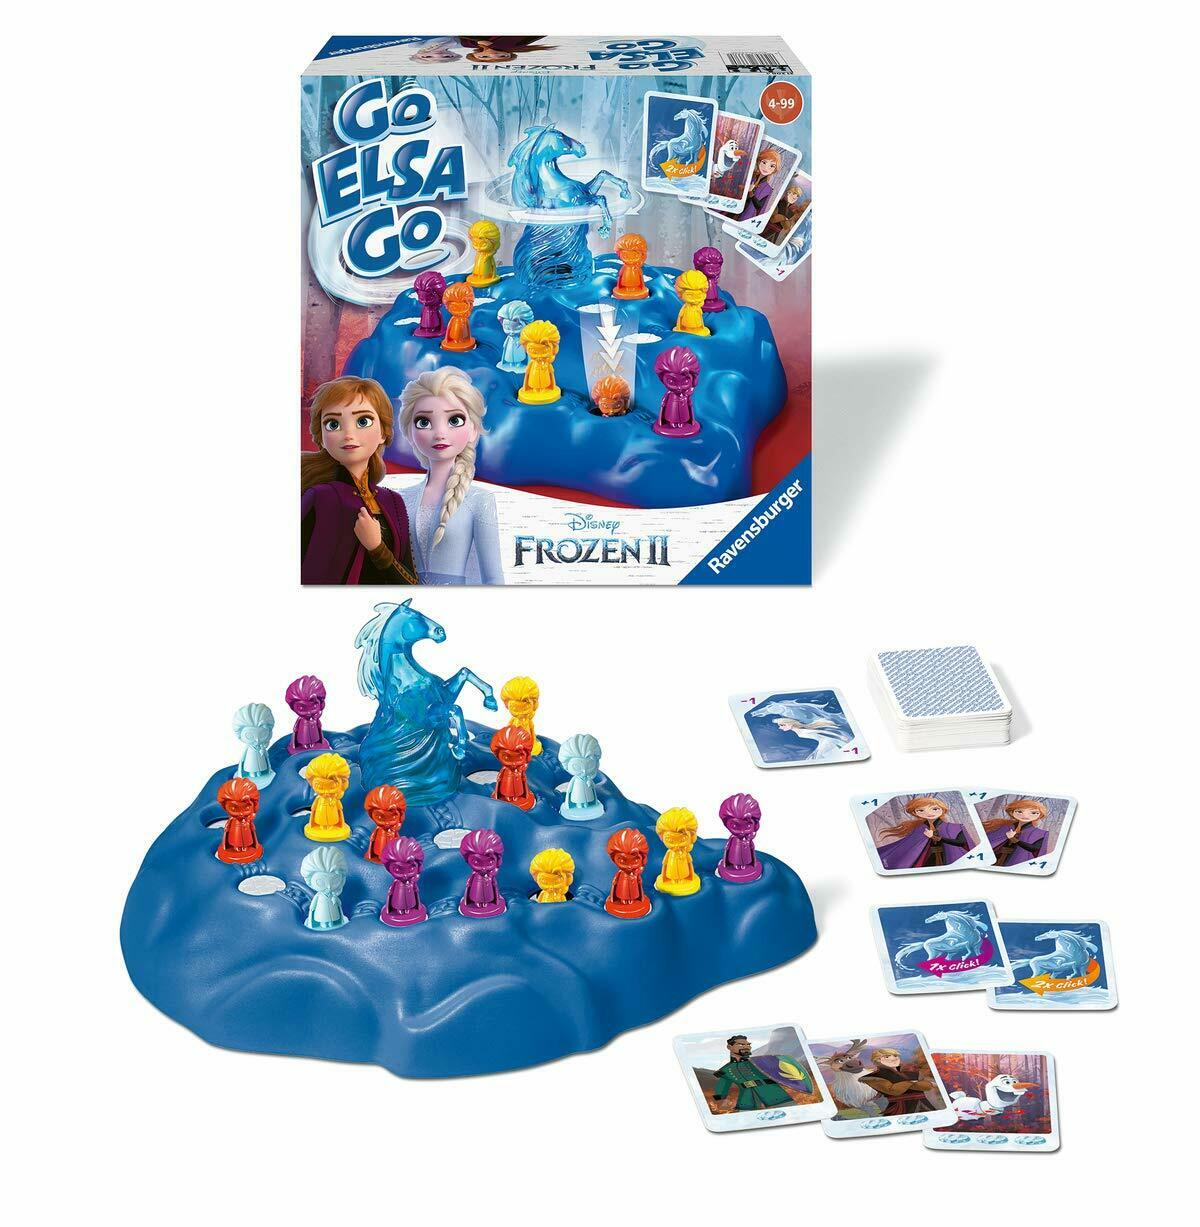 20425 Ravensburger Disney Frozen 2 Go Elsa Go Board Game Suitable for ages 4yrs+